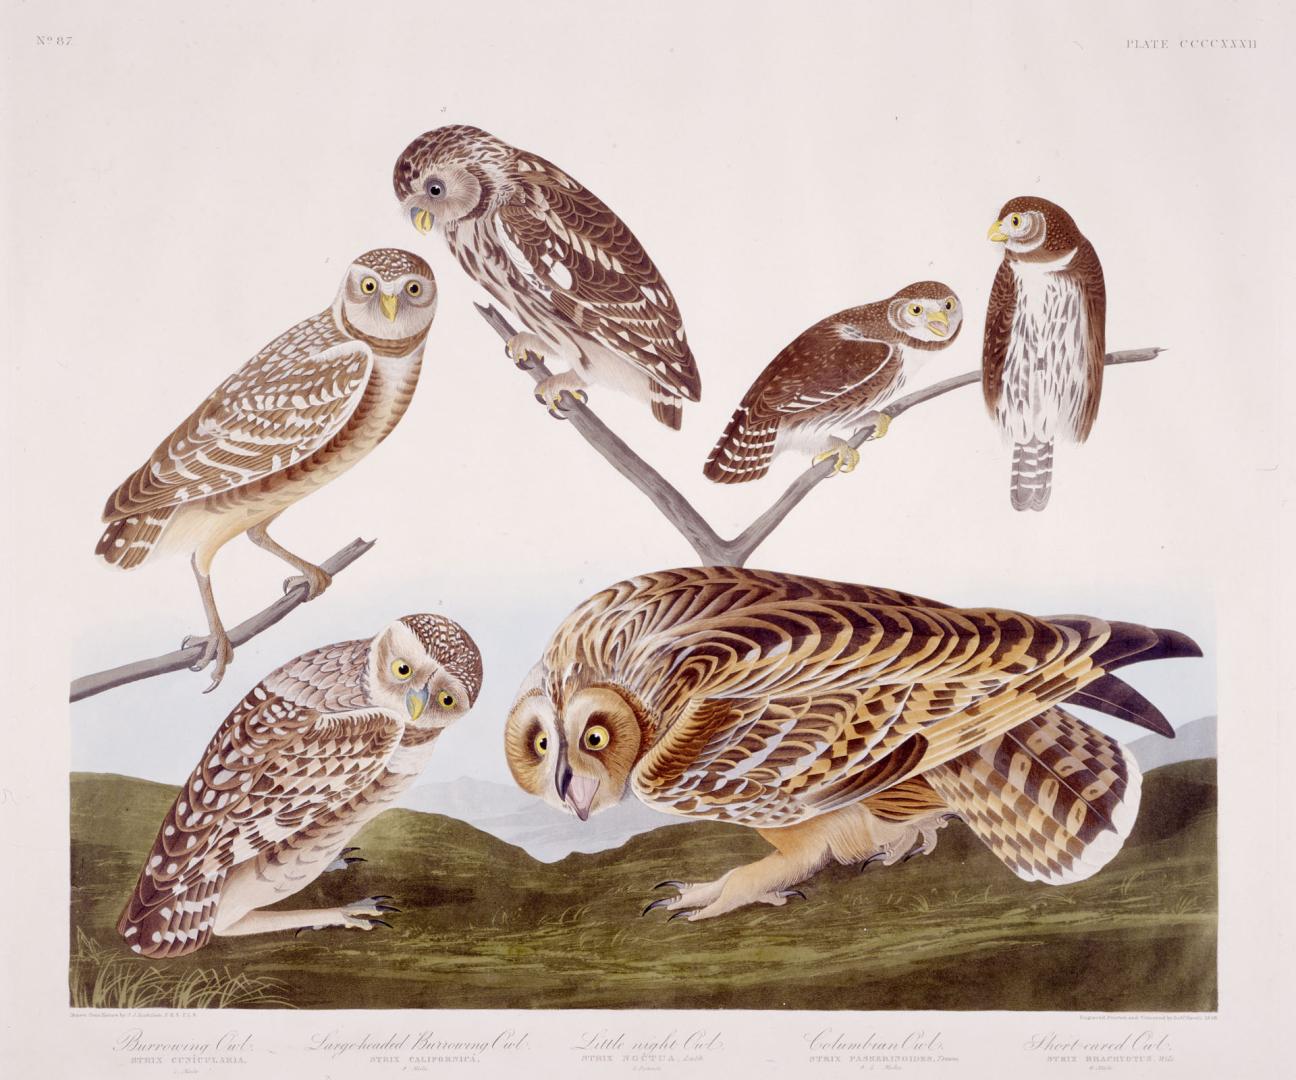 1. Burrowing Owl, 2. Large-headed Burrowing Owl, 3. Little night Owl, 4. Columbian Owl, 5. Short-eared Owl